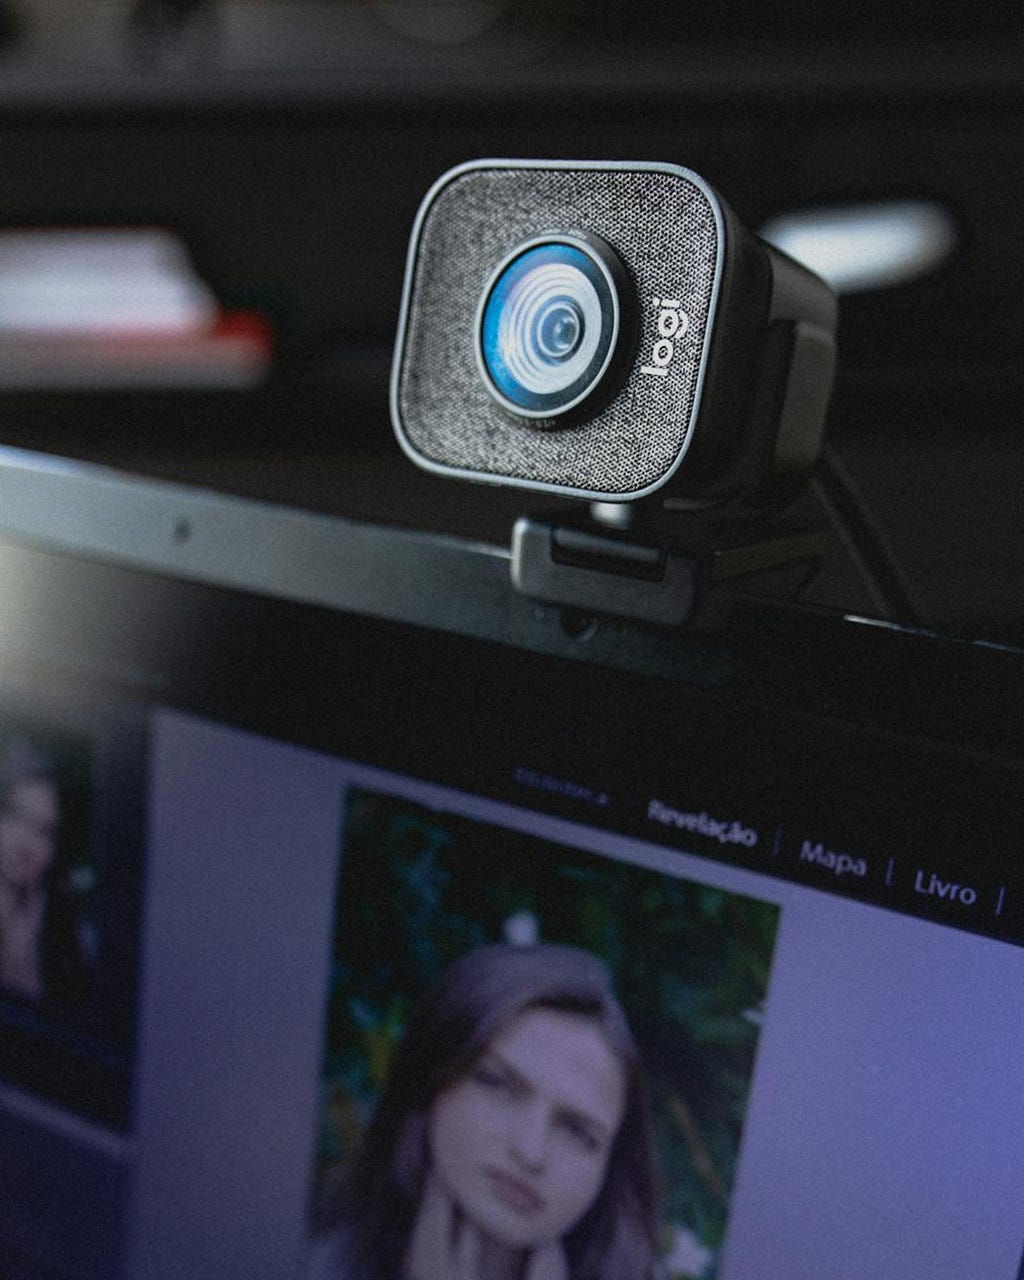 modern external video camera or webcam hanging on display of laptop